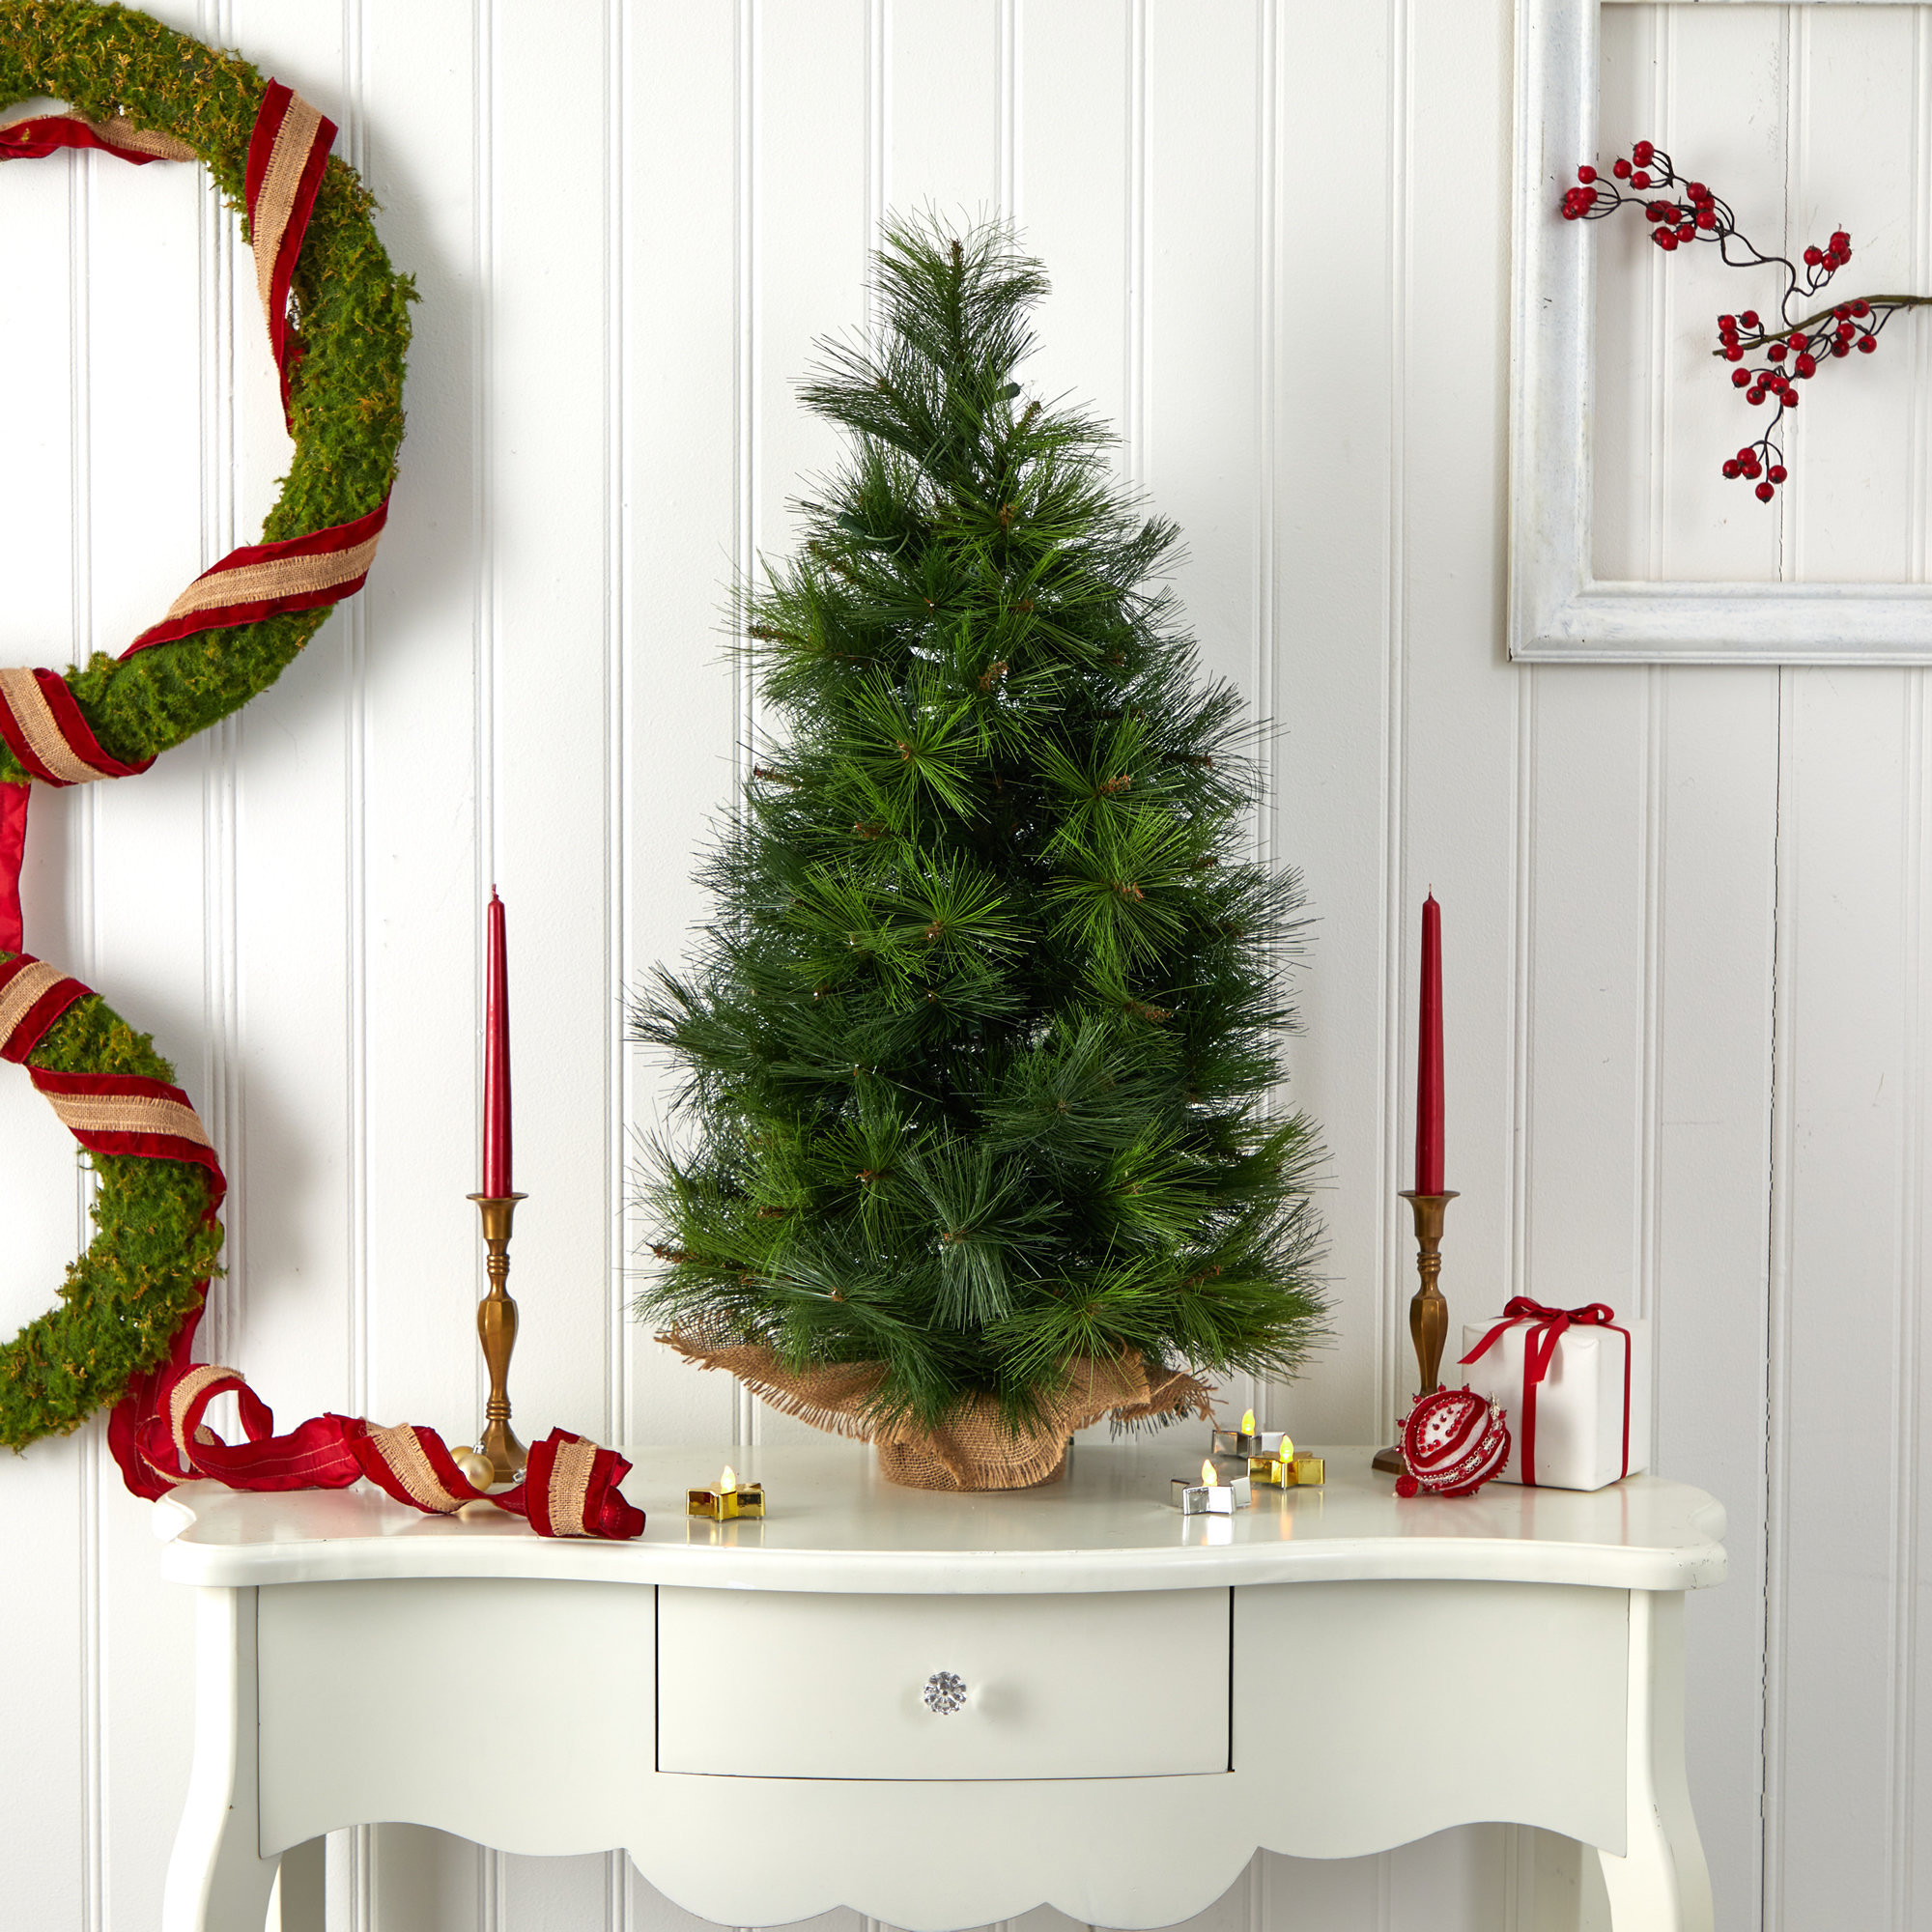 3 Easy Mini Christmas Tree Decorations